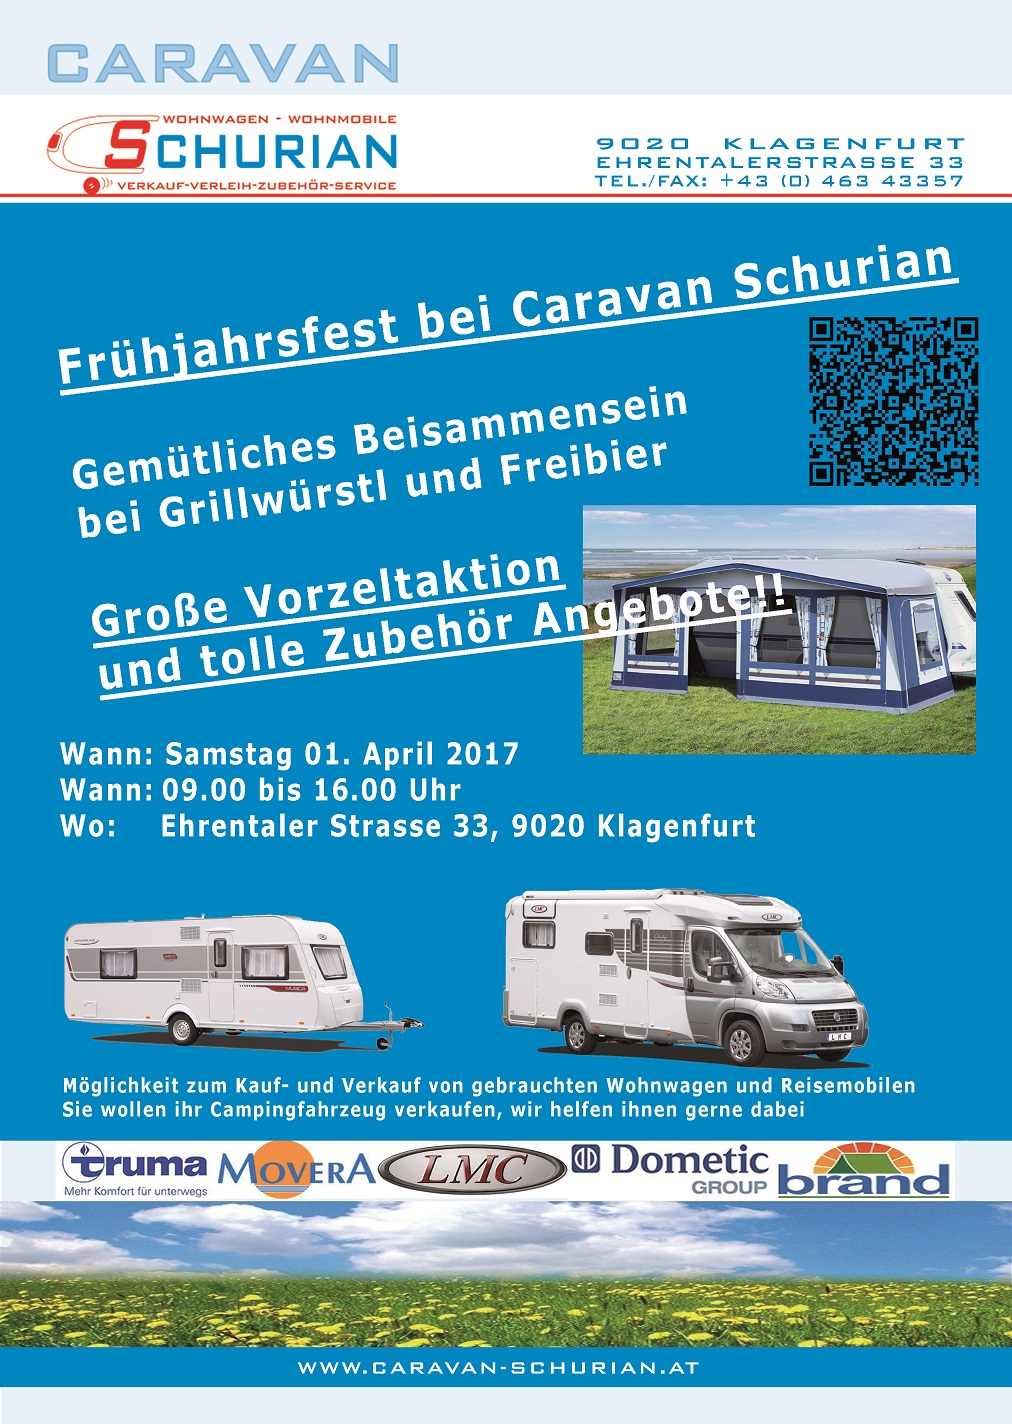 Frühlingsfest bei Caravan Schurian in Klagenfurt am Wörthersee